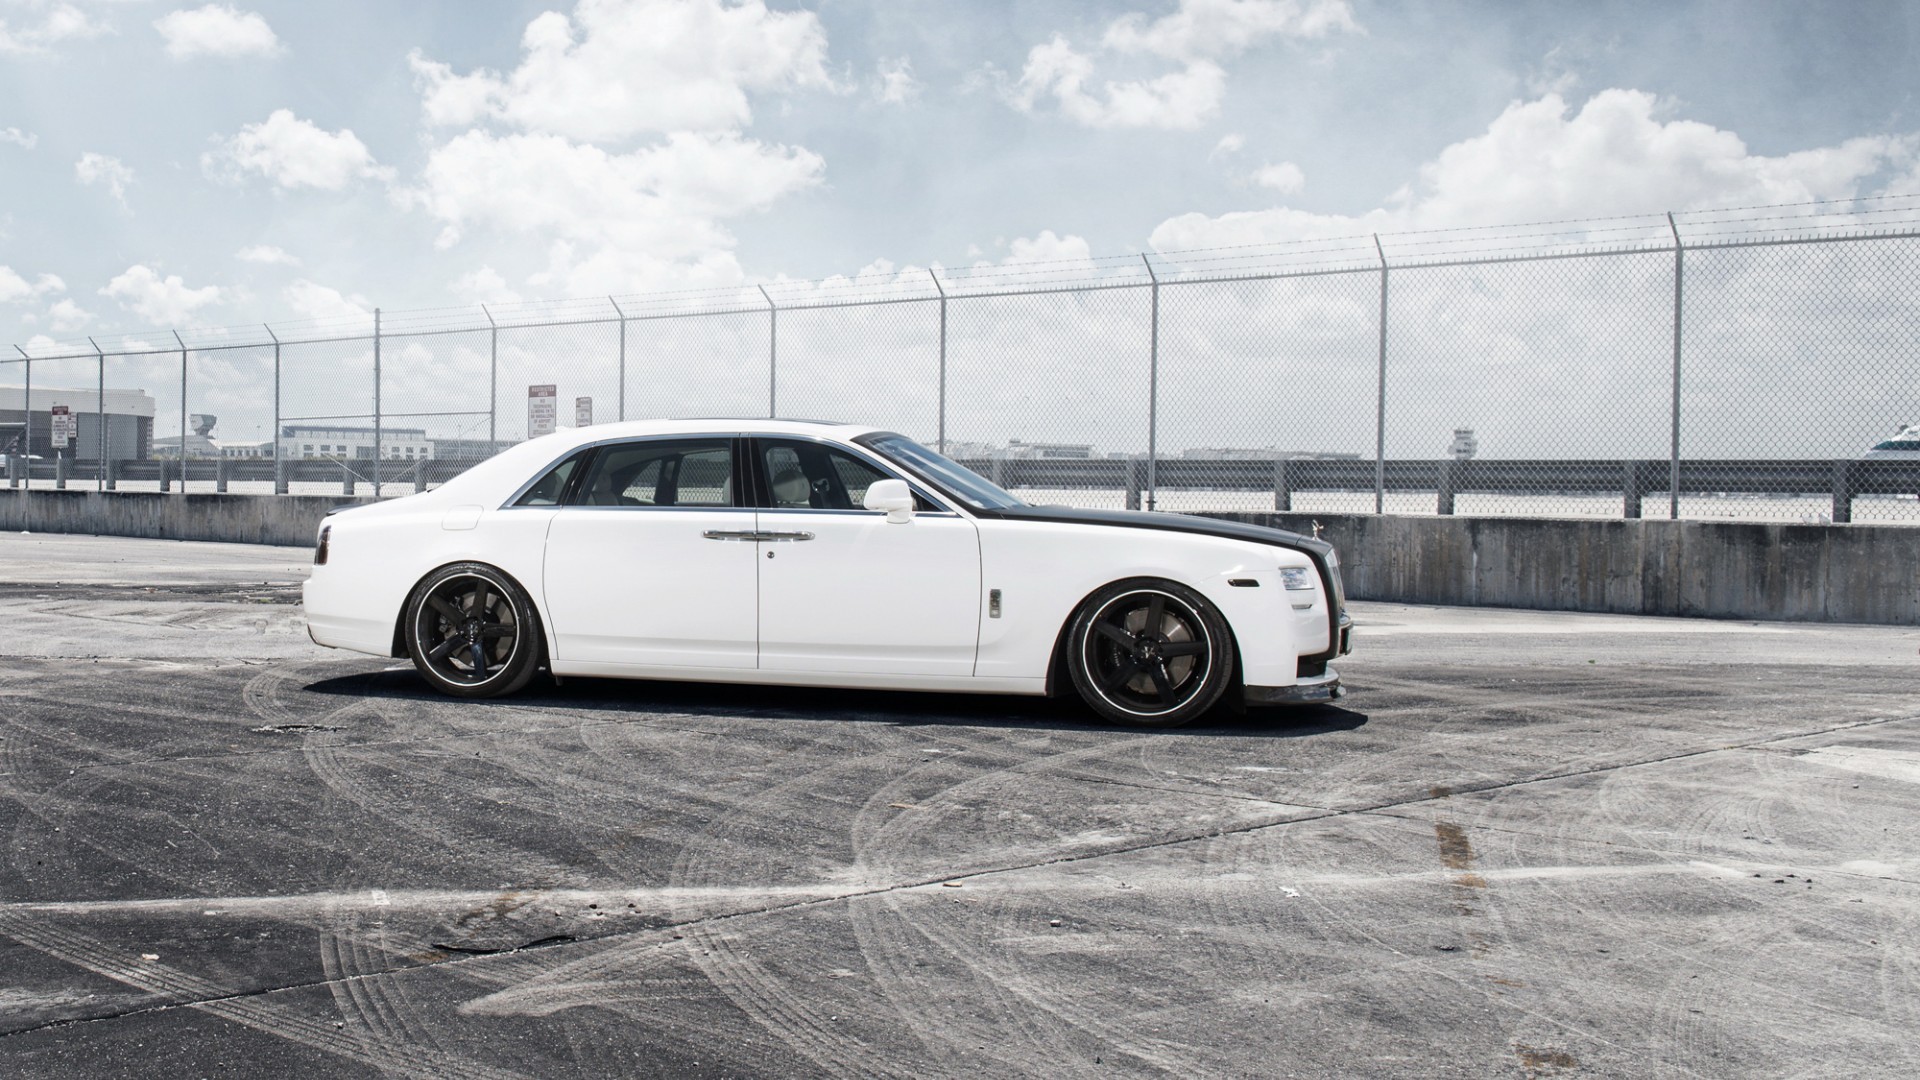 Rolls Royce Phantom, Car Wallpaper